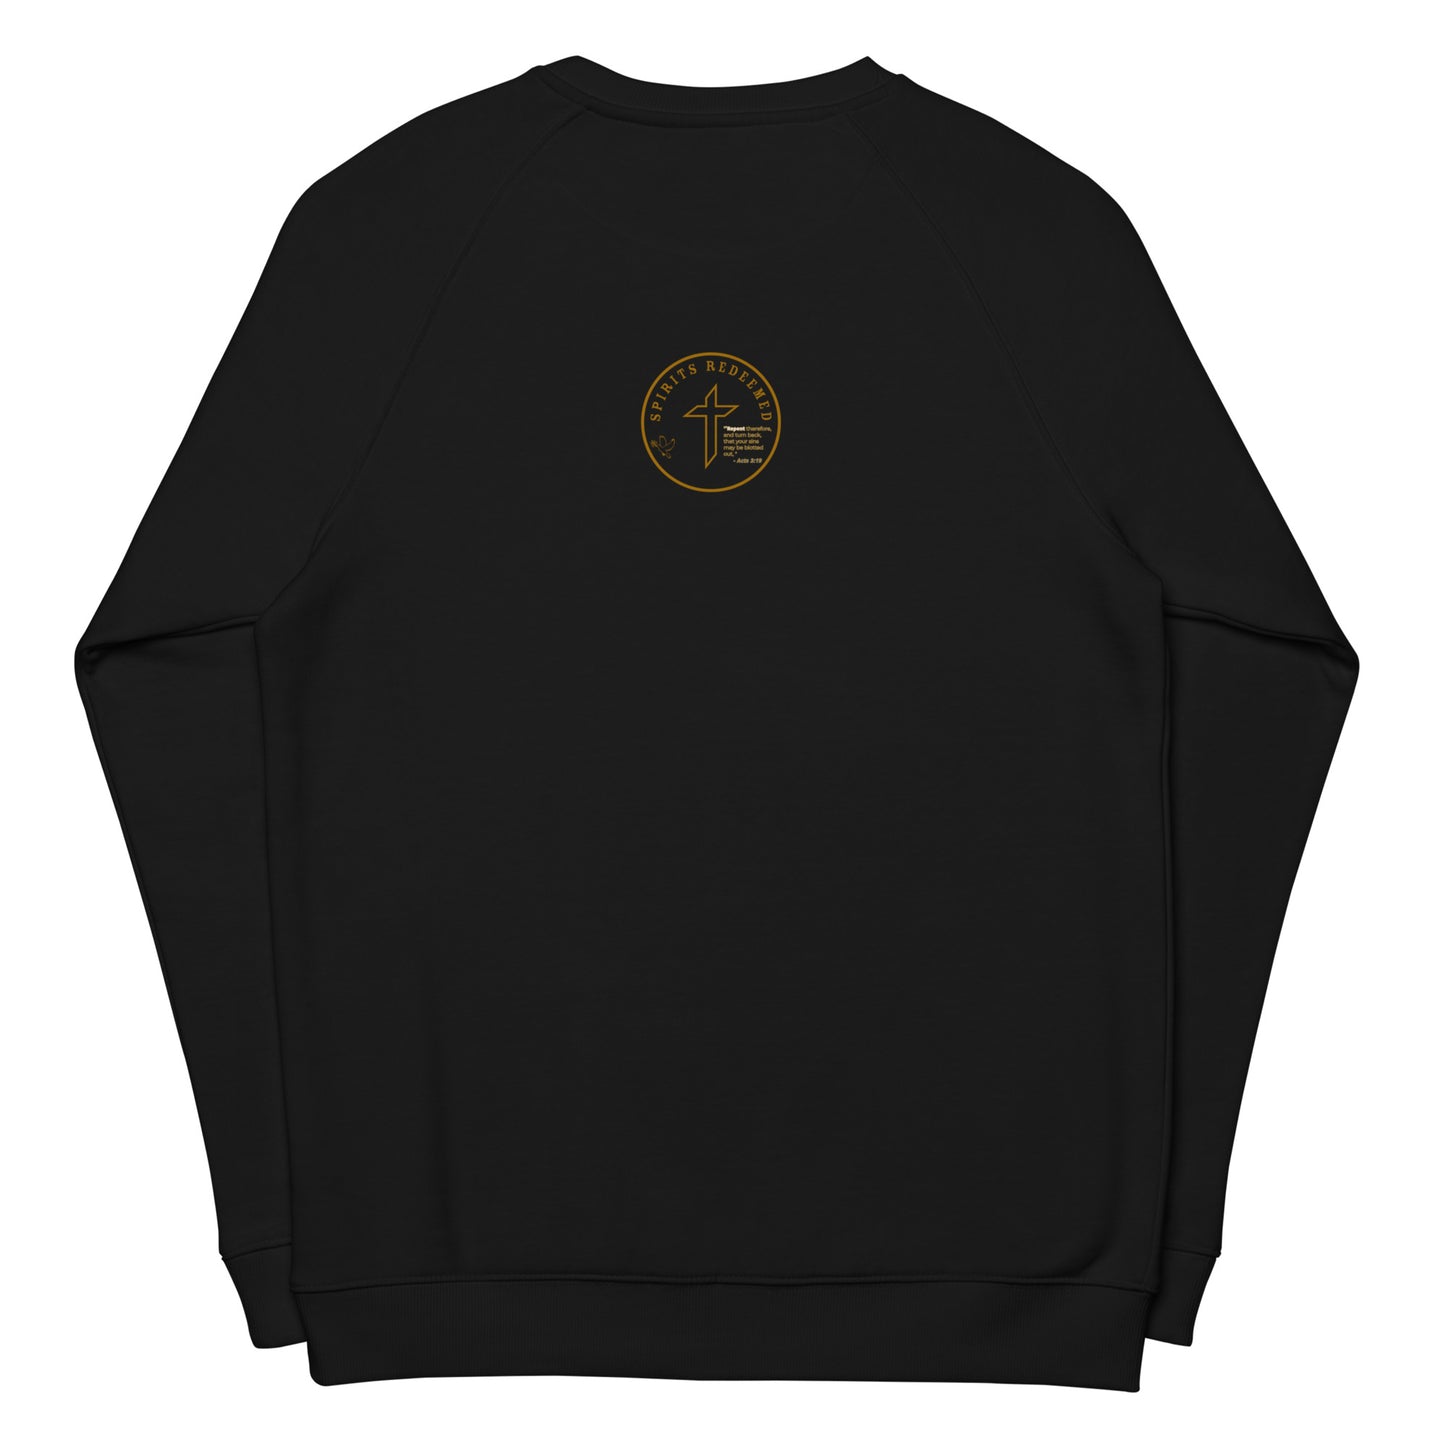 Jesus Saves - Black Unisex organic raglan sweatshirt